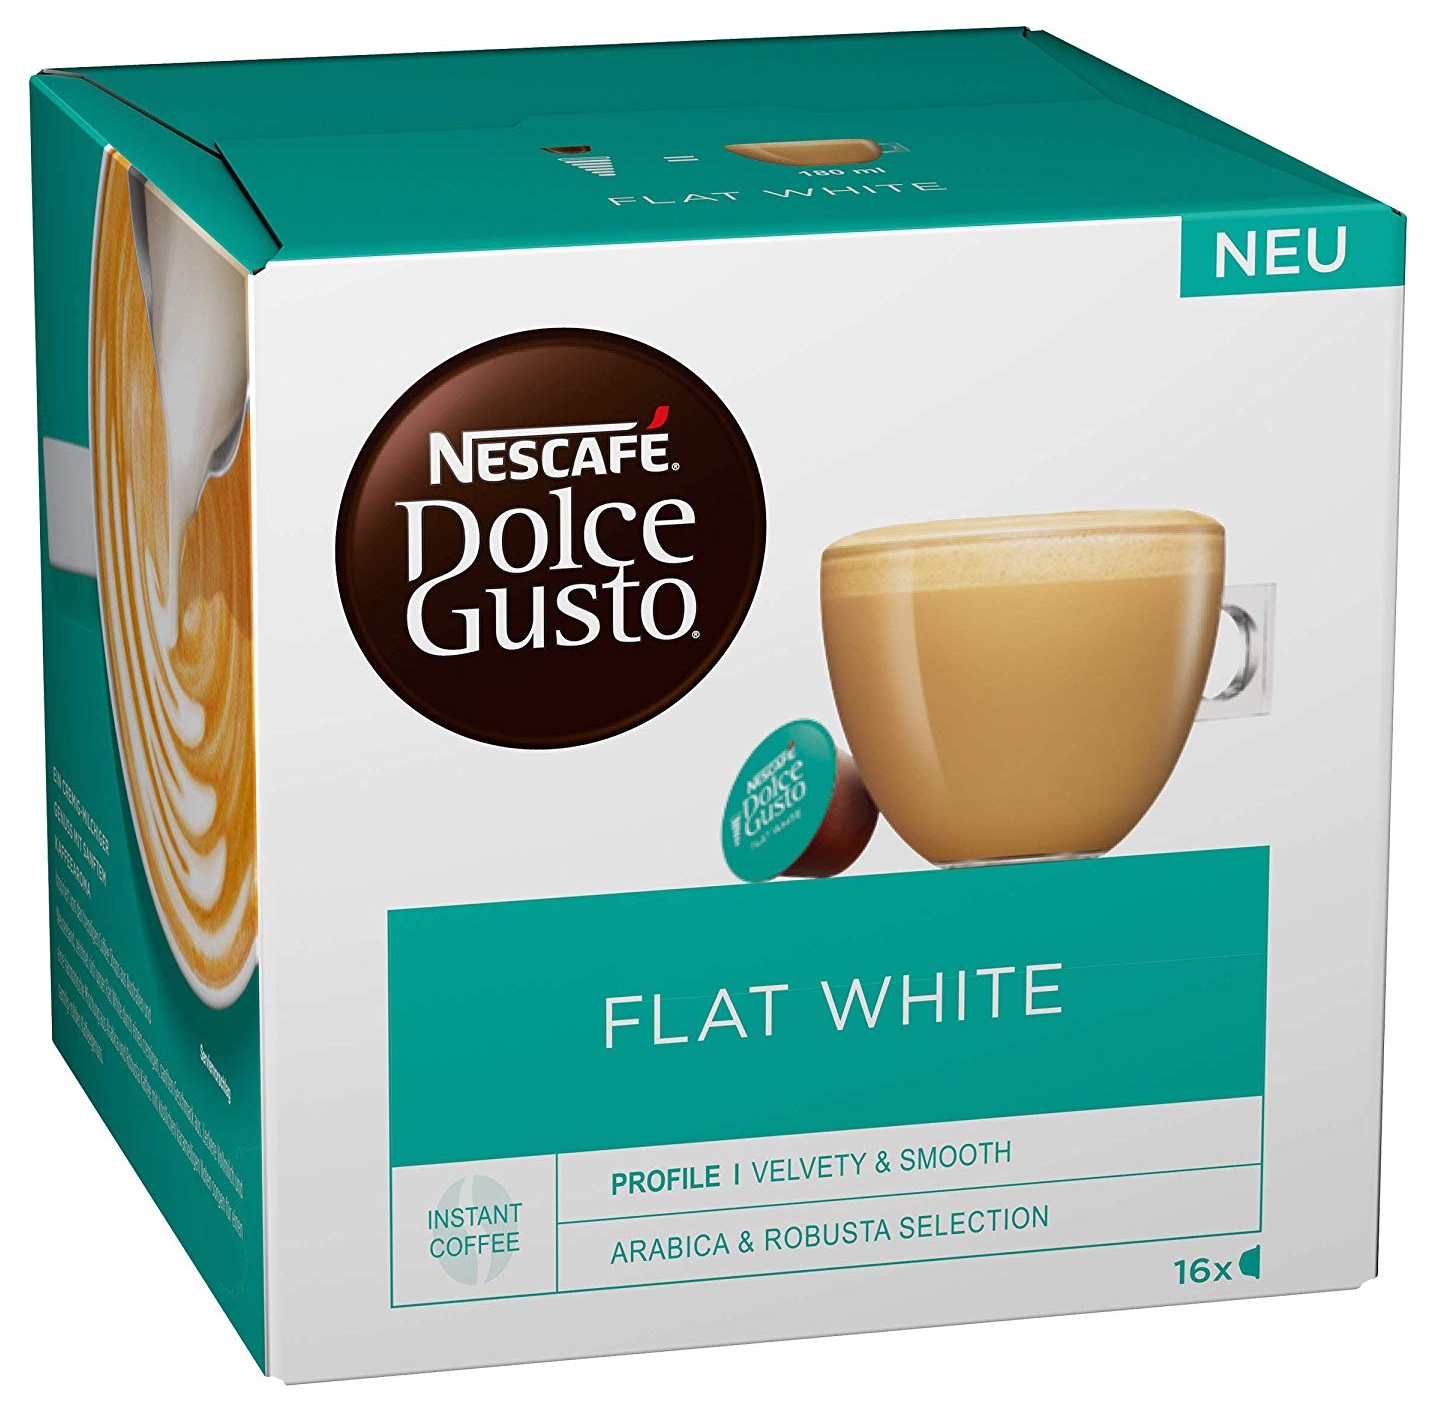 Nescafe Dolce Gusto молочный кофе плоский белый 16x бренд Nescafe Dolce Gusto